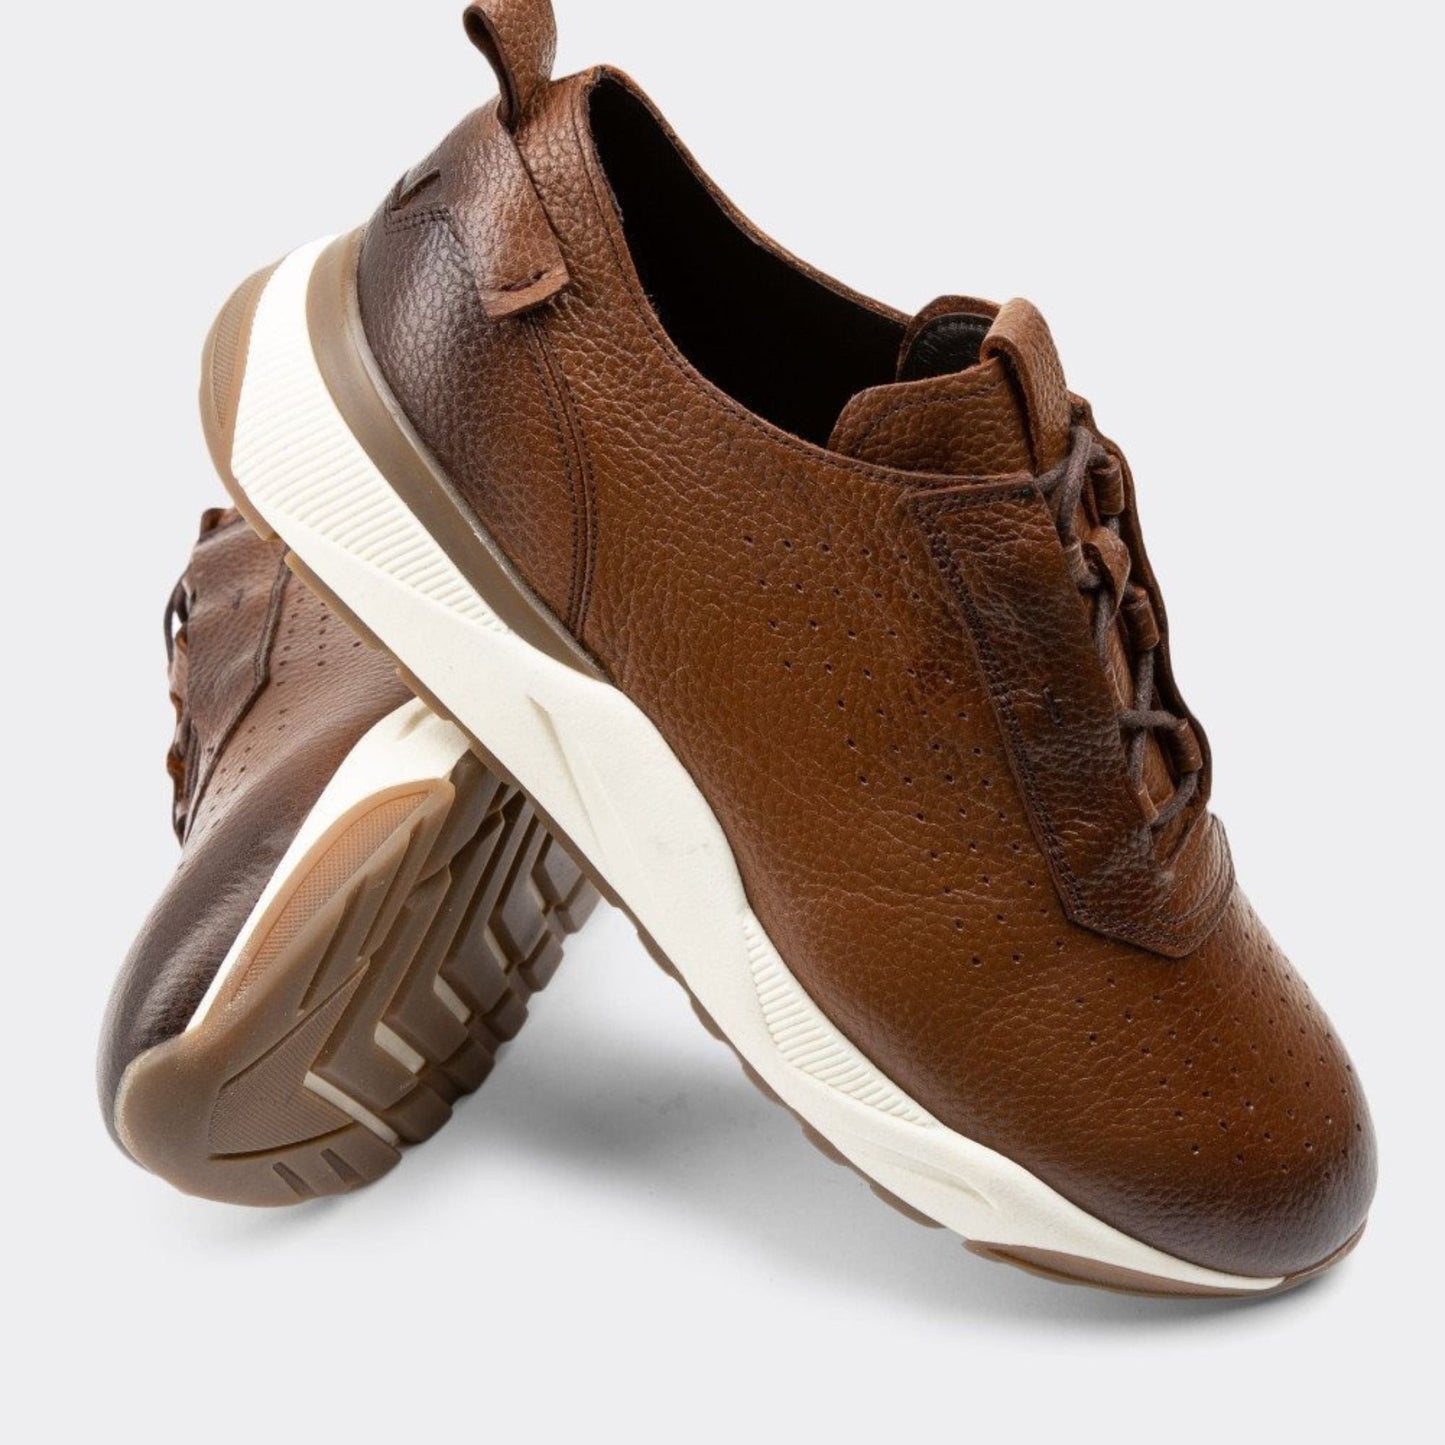 Madasat Tan Sneaker Sport Shoes - 731 |